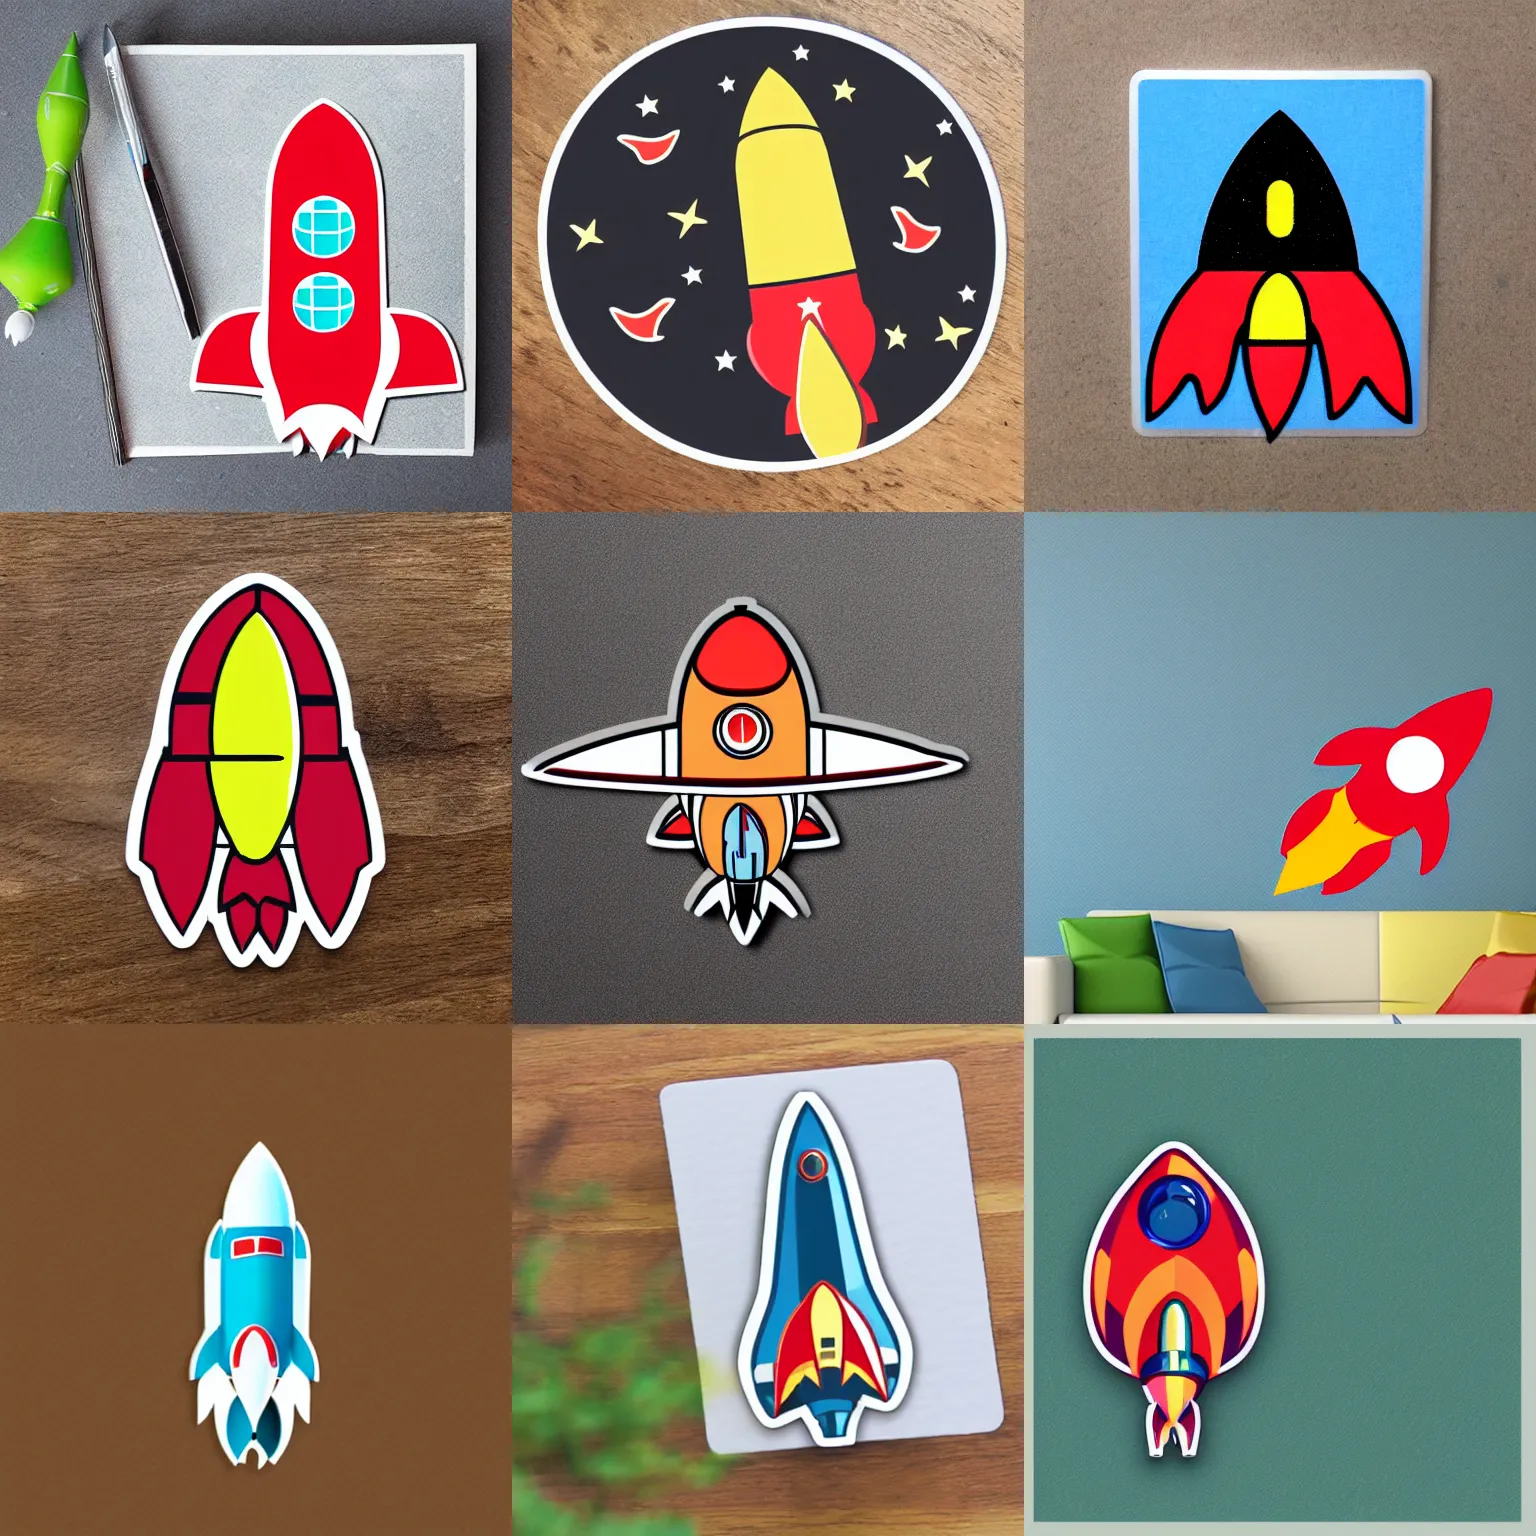 Prompt: a sticker of a rocket ship, online